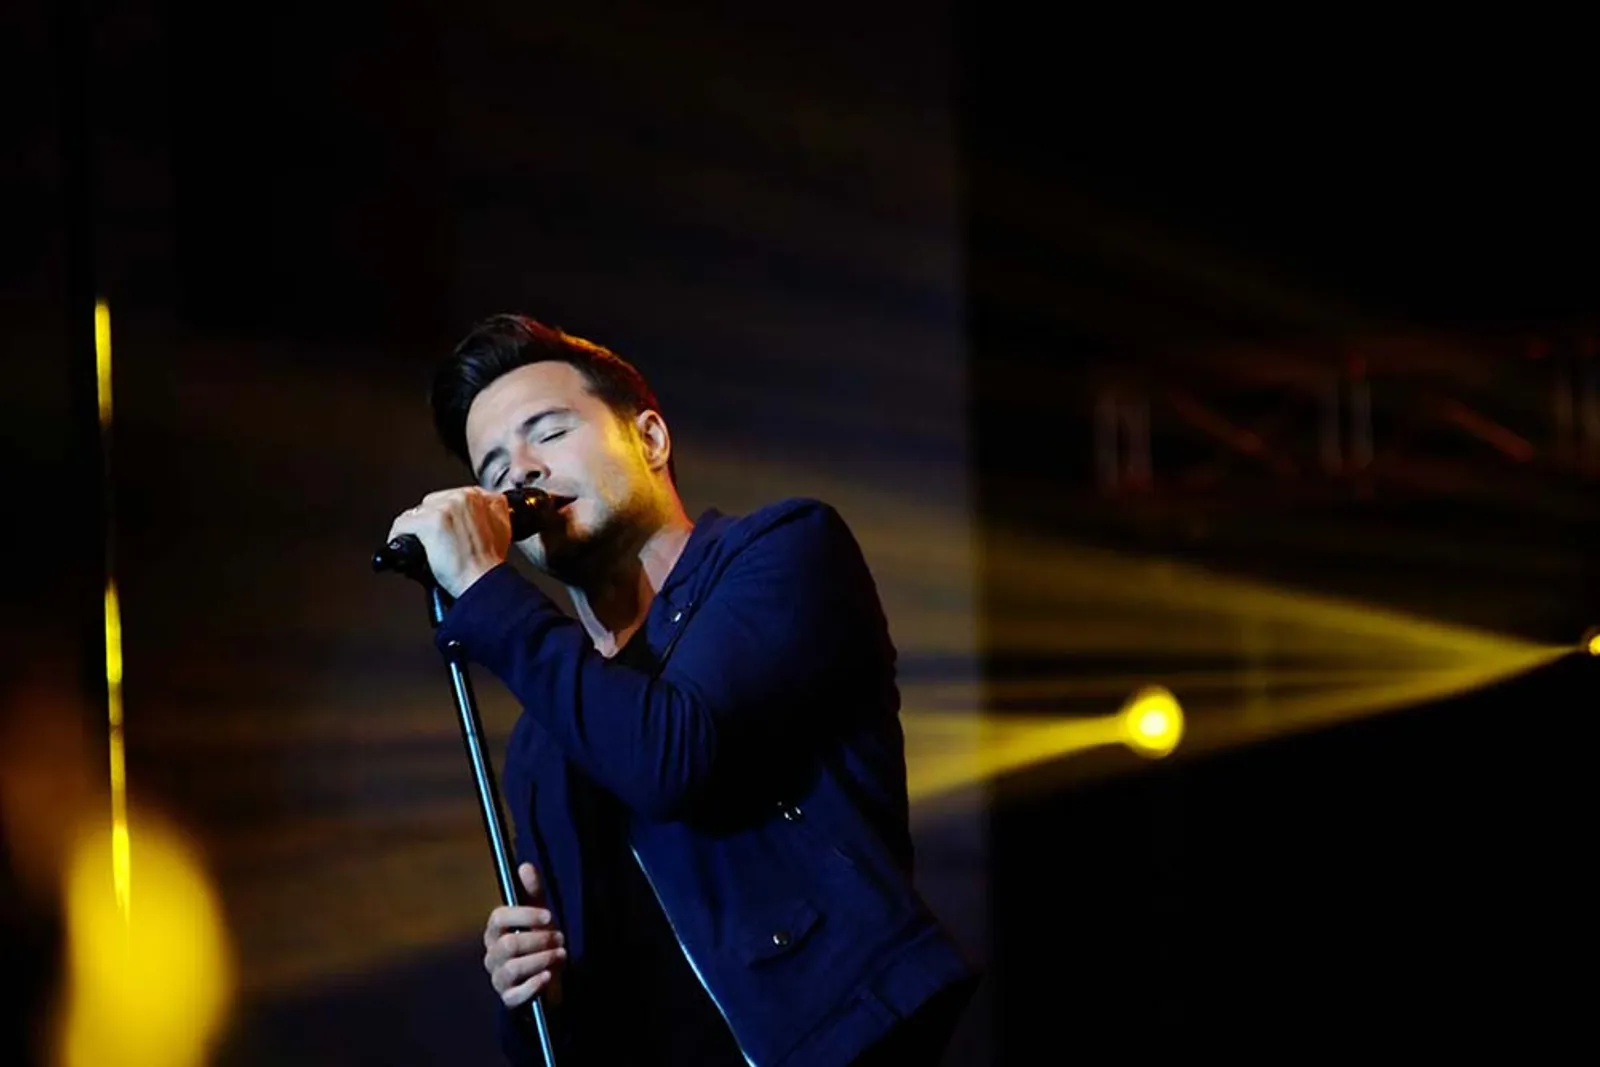 Simak Cerita Seru Liputan Konser Shane Filan di Bandung